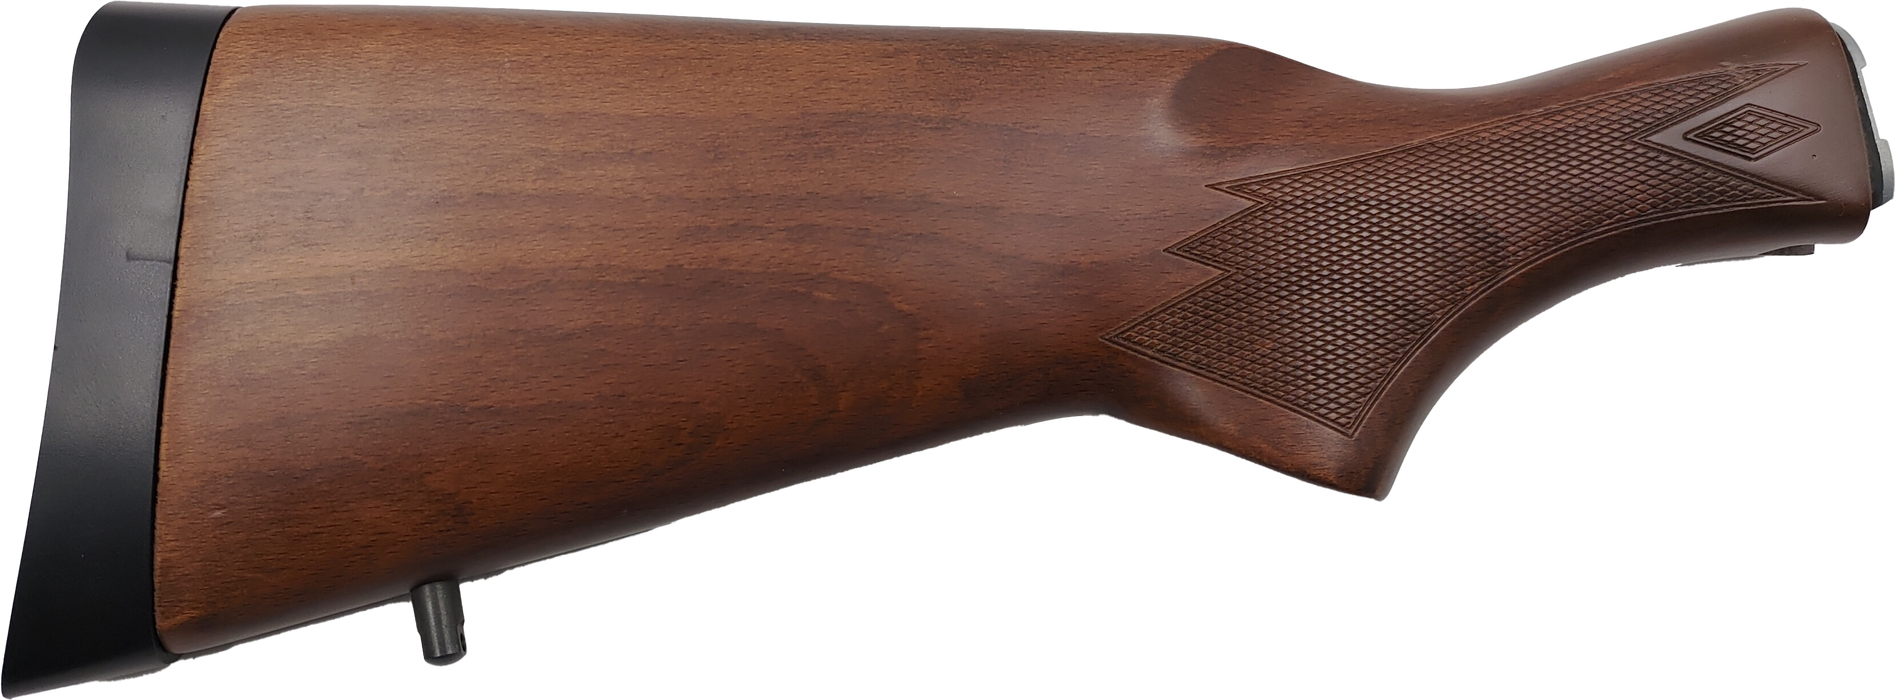 JAG Arms Modular Scattergun Real wood stock